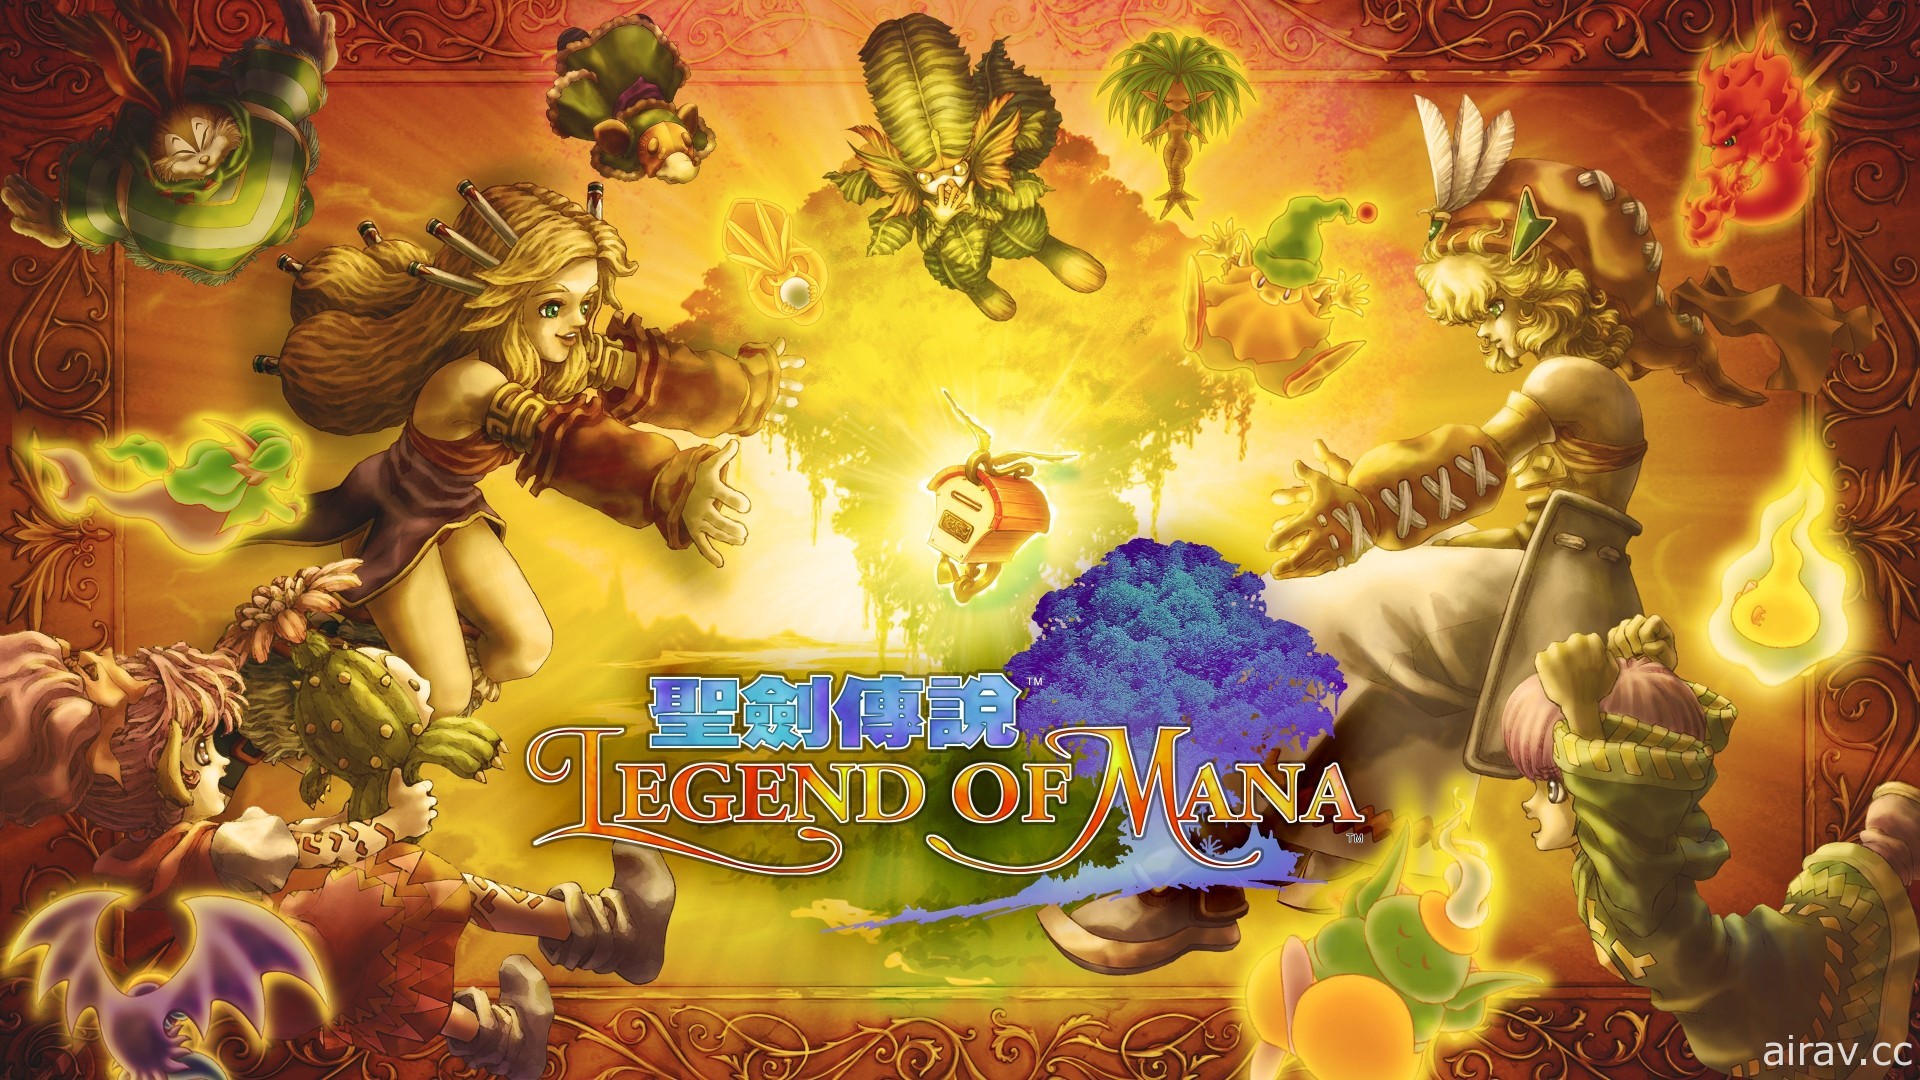 《圣剑传说 Legend of Mana》HD Remaster 版 6 月 24 日登场